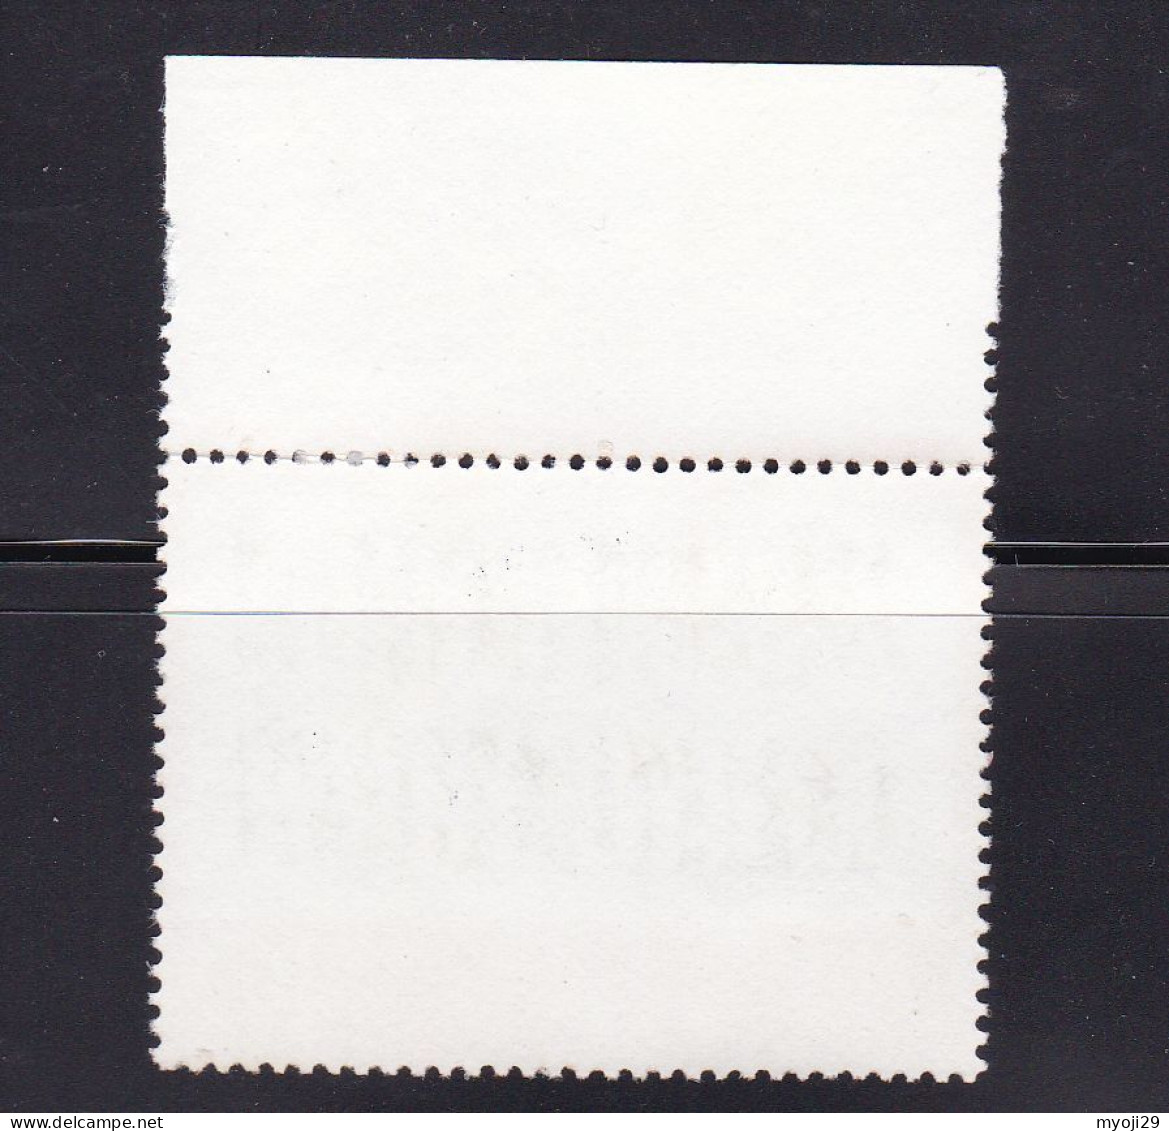 1967 China W7 Poem 10c ** MNH - Unused Stamps